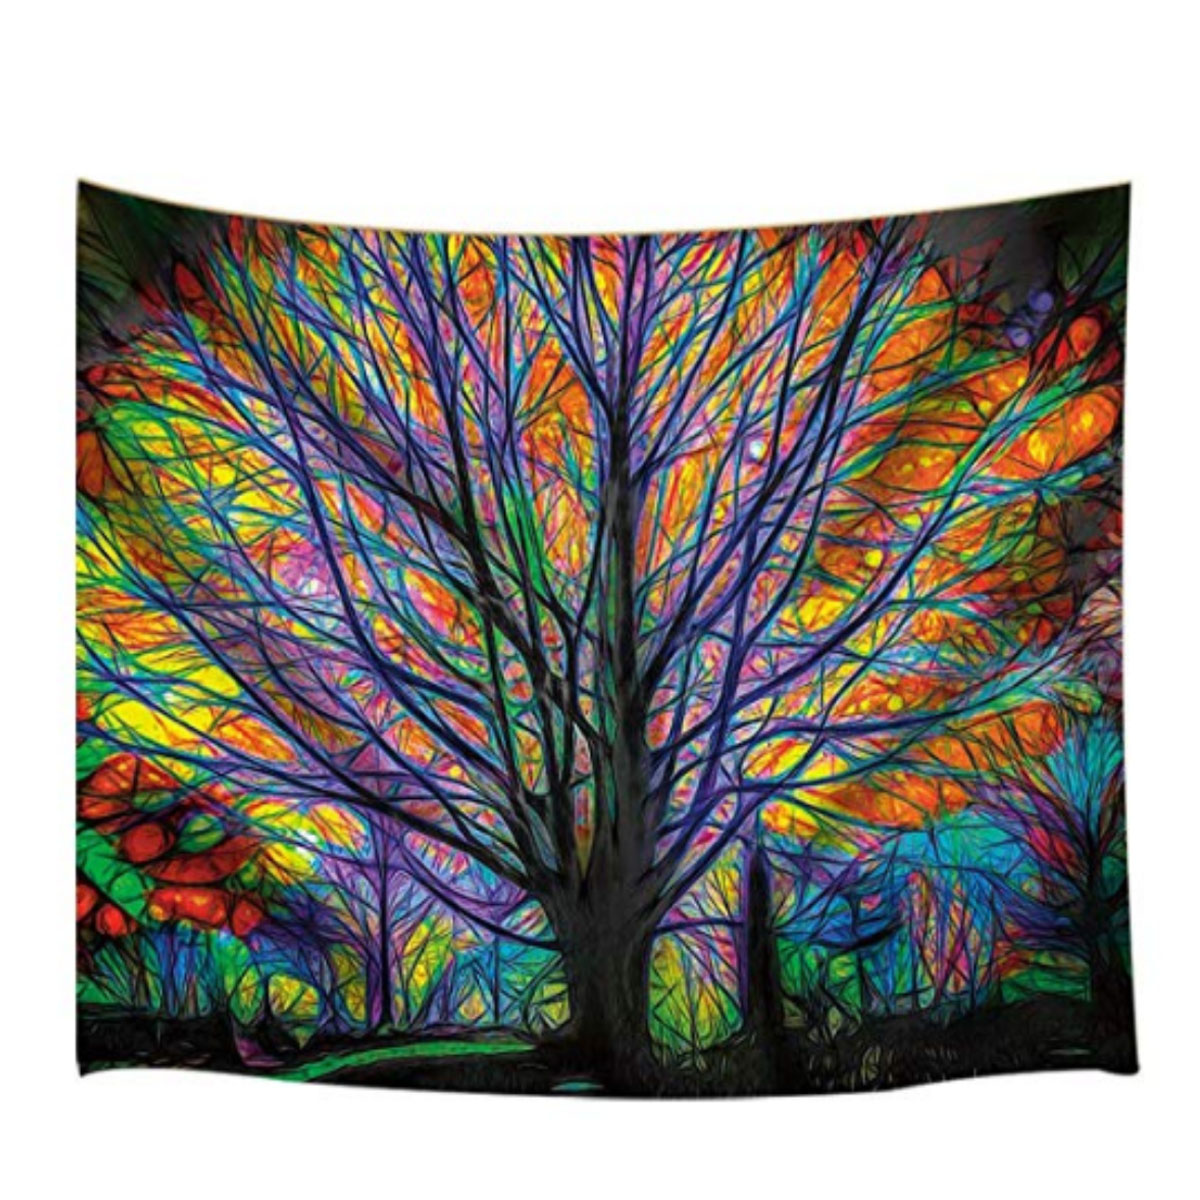 180x180cm-Colorful-Tree-Leaves-Waterproof-Bathroom-Shower-Curtain-w-12-Hooks-1558895-4